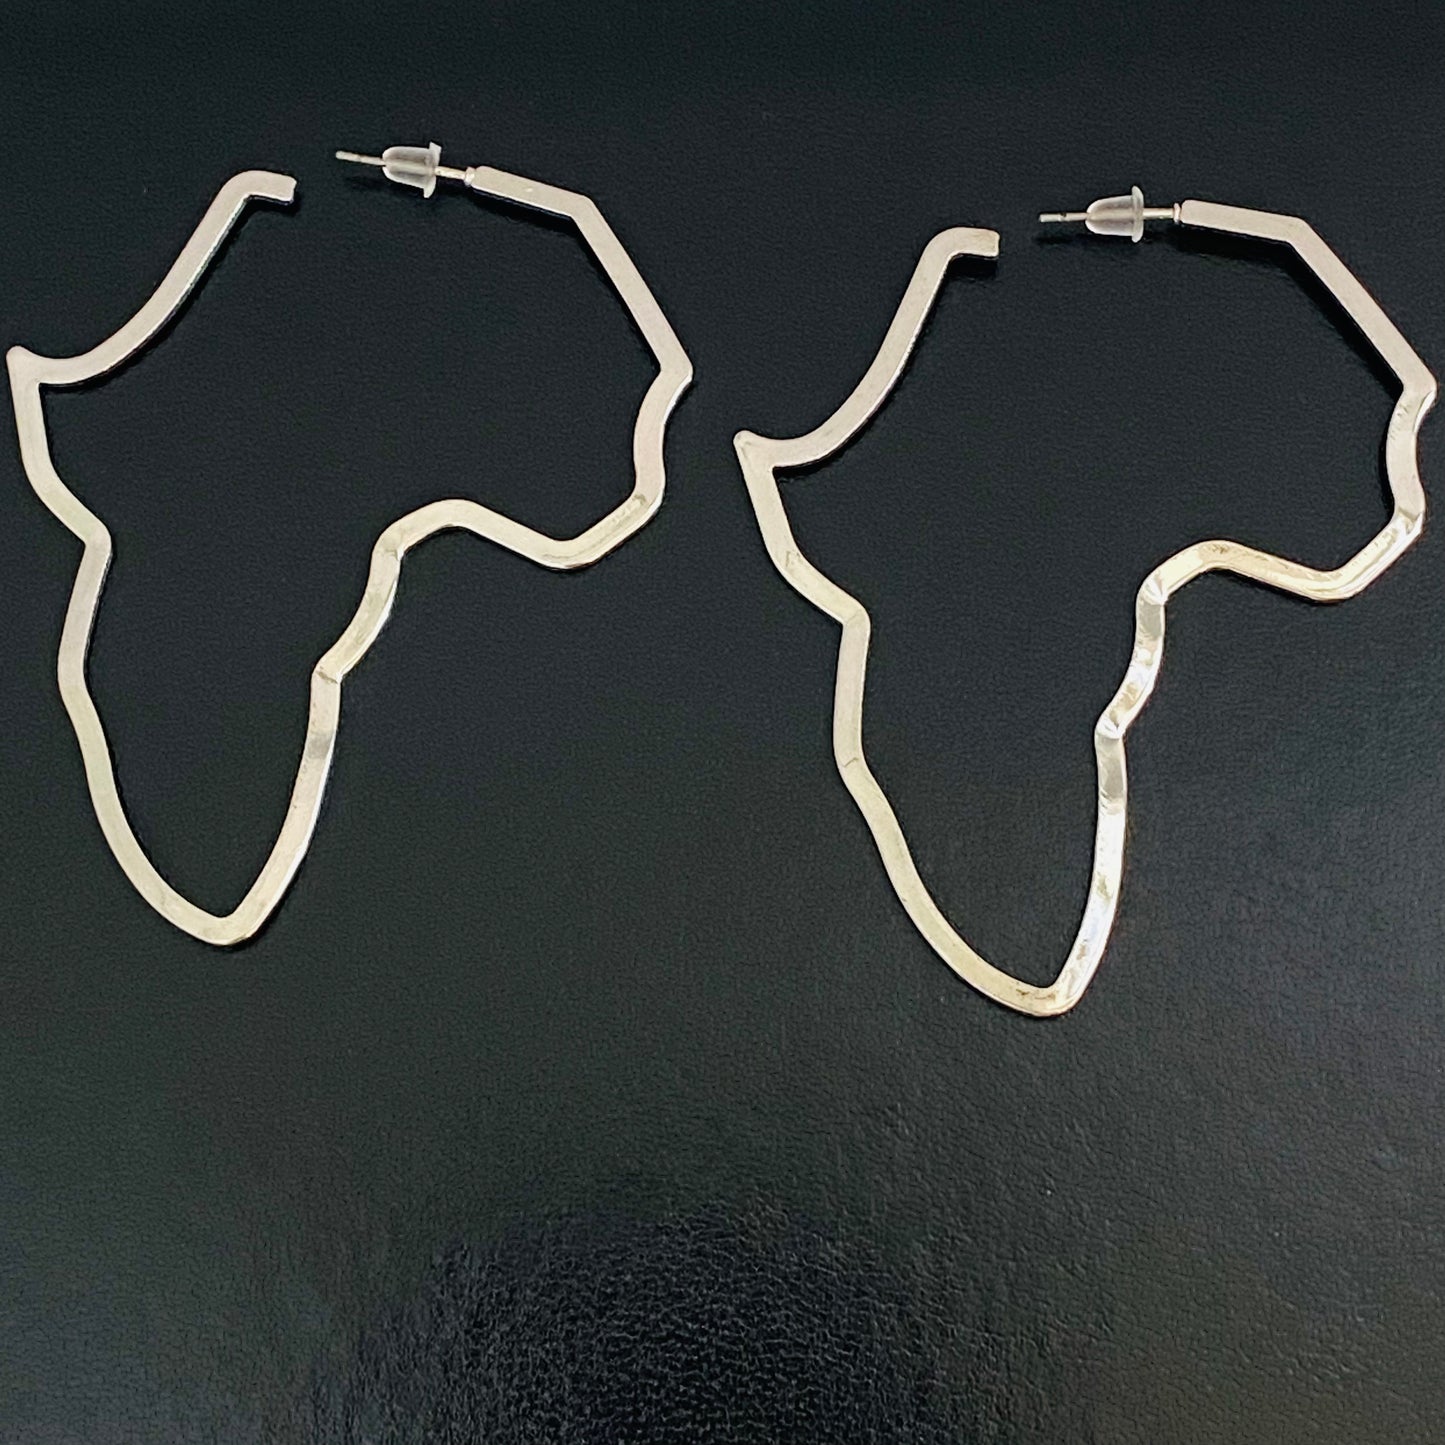 Silver Map of Africa Earrings